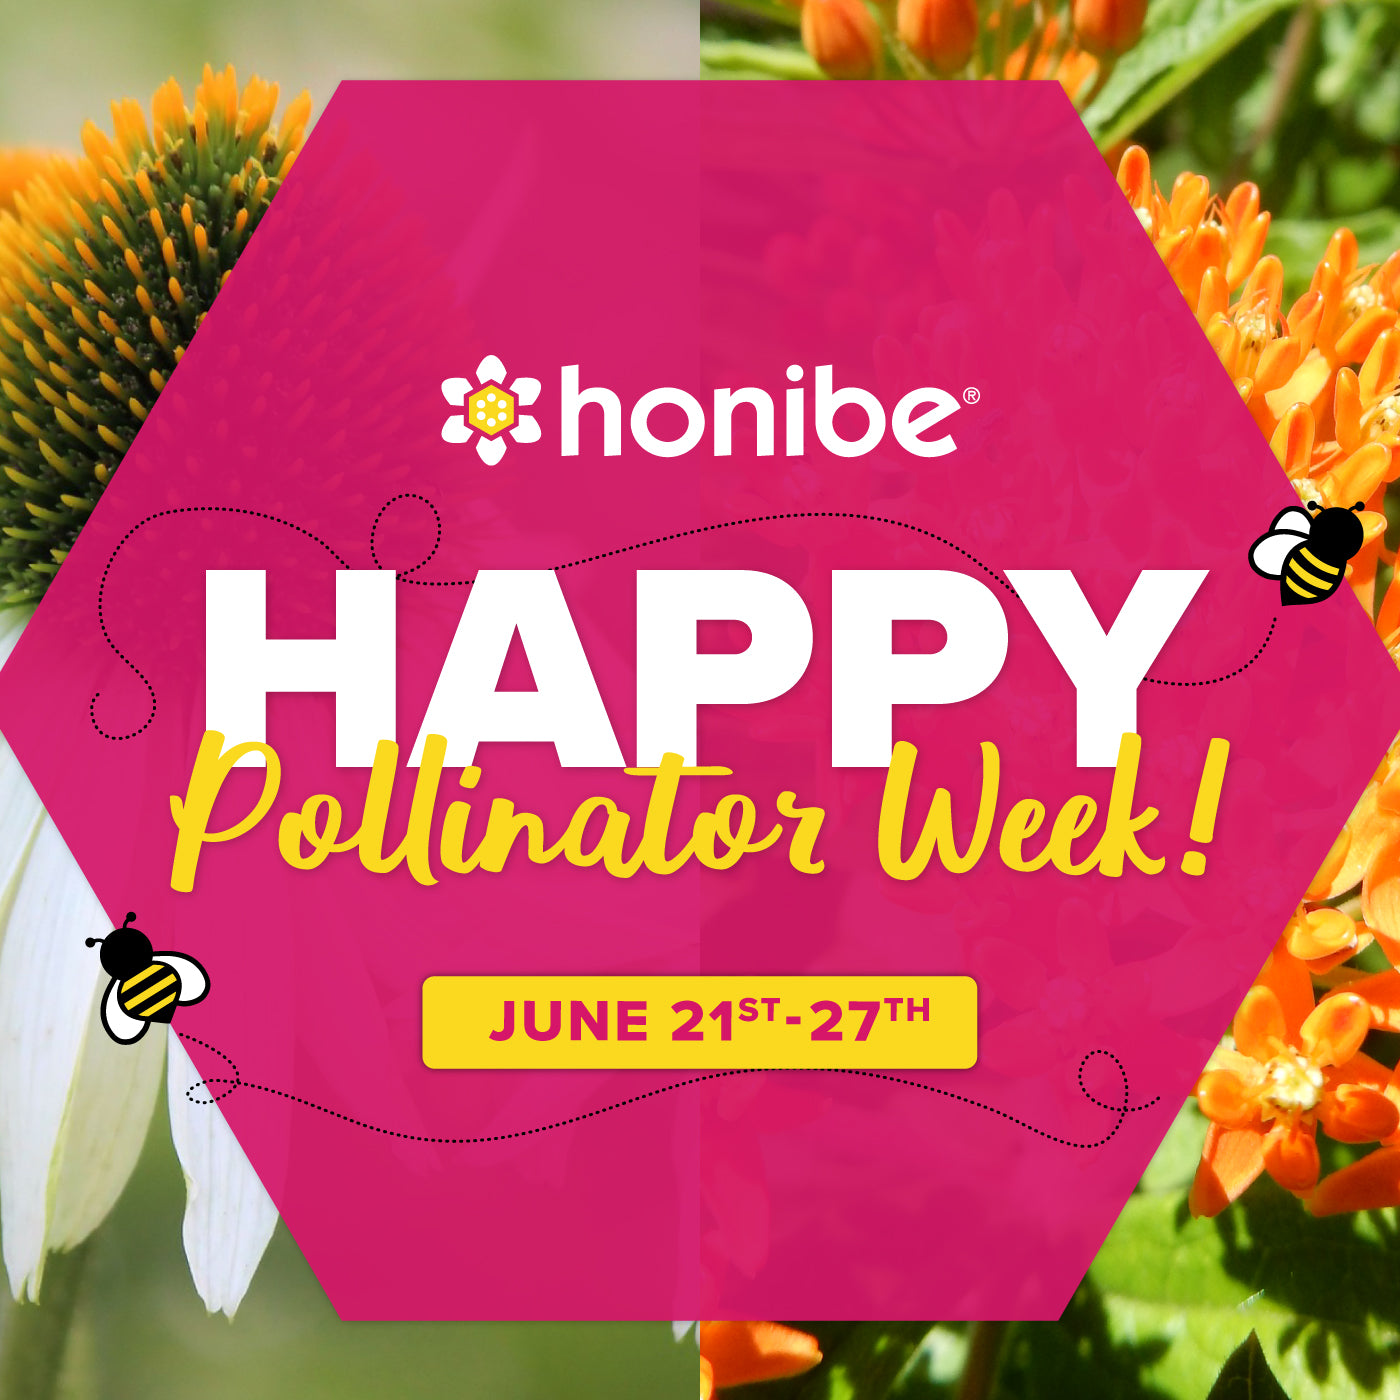 Celebrate Pollinator Week!